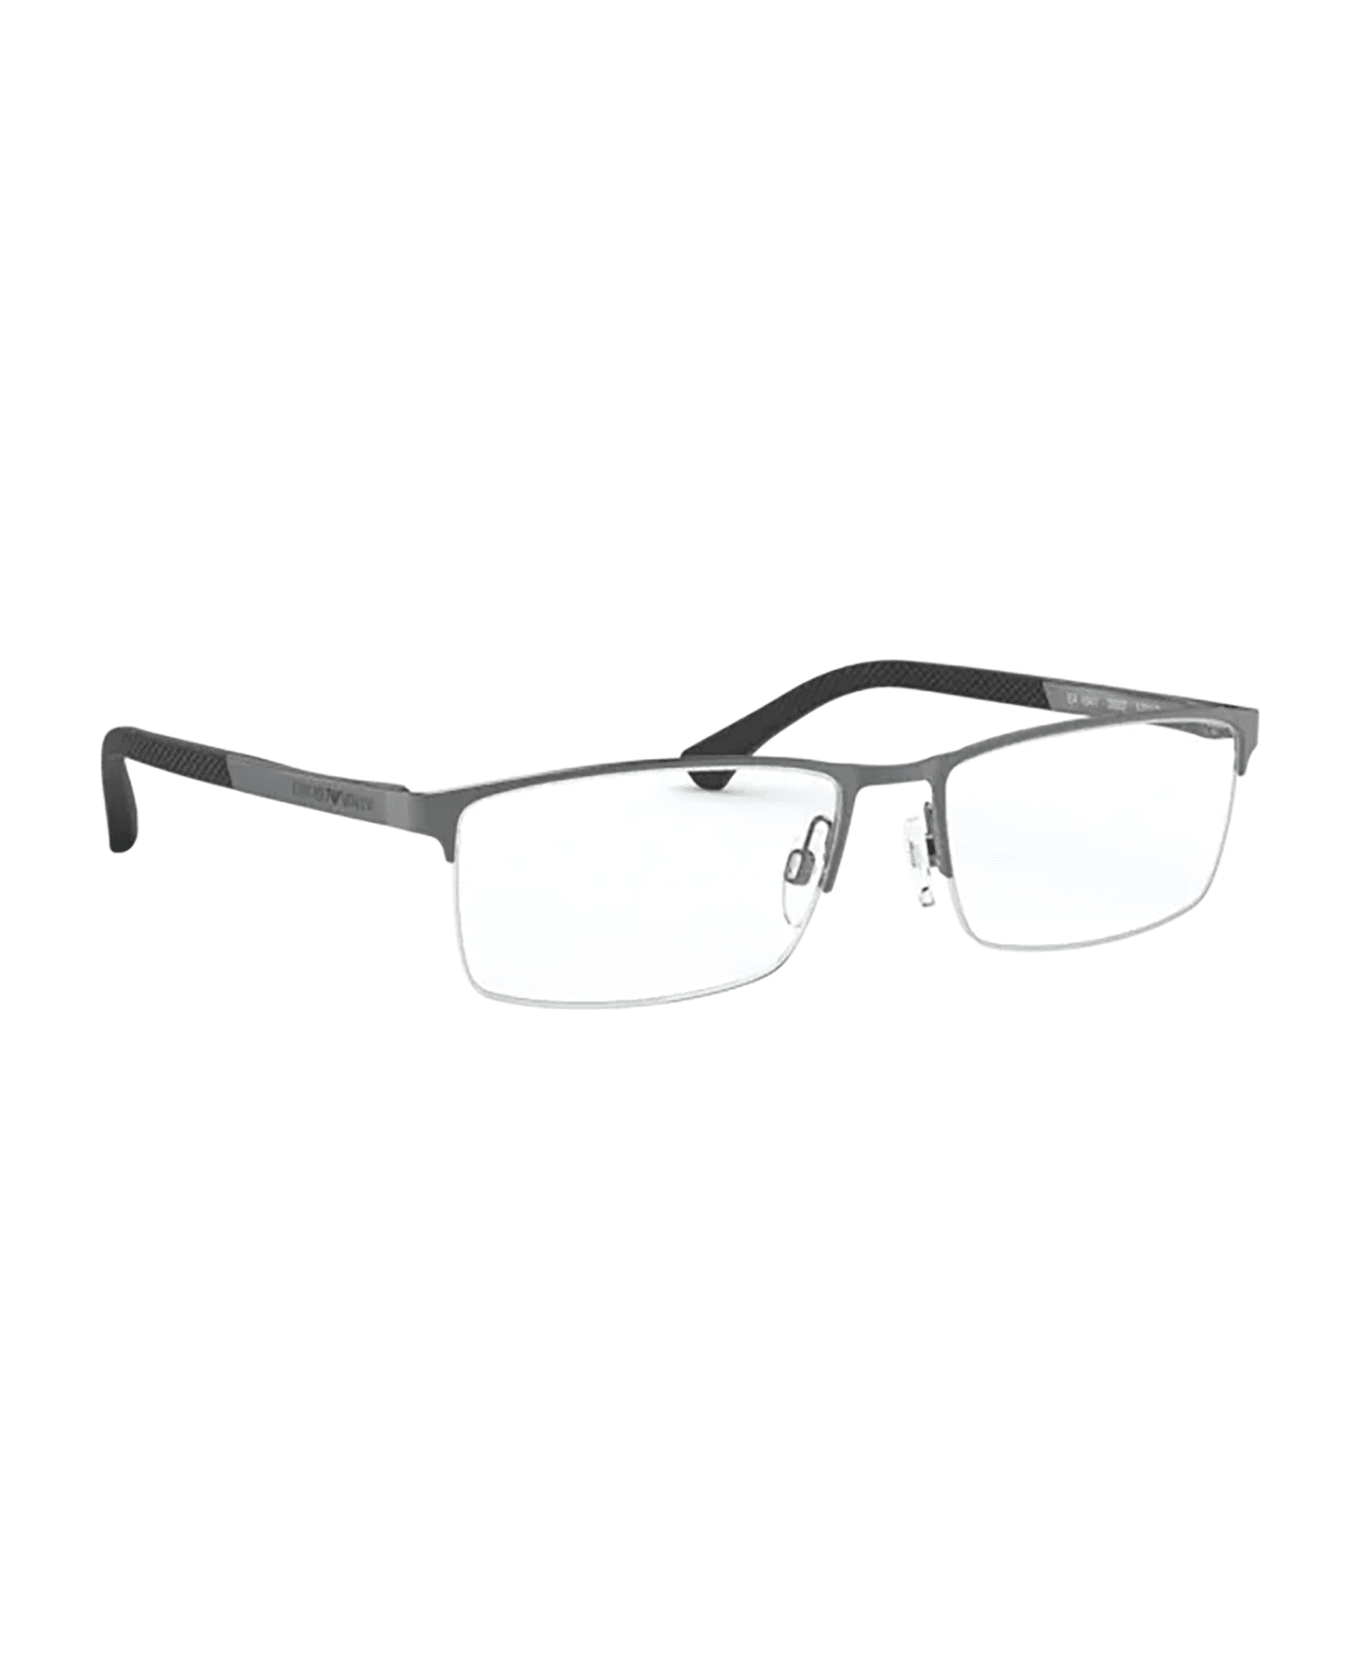 Emporio Armani Ea1041 Matte Gunmetal Glasses - Matte Gunmetal アイウェア